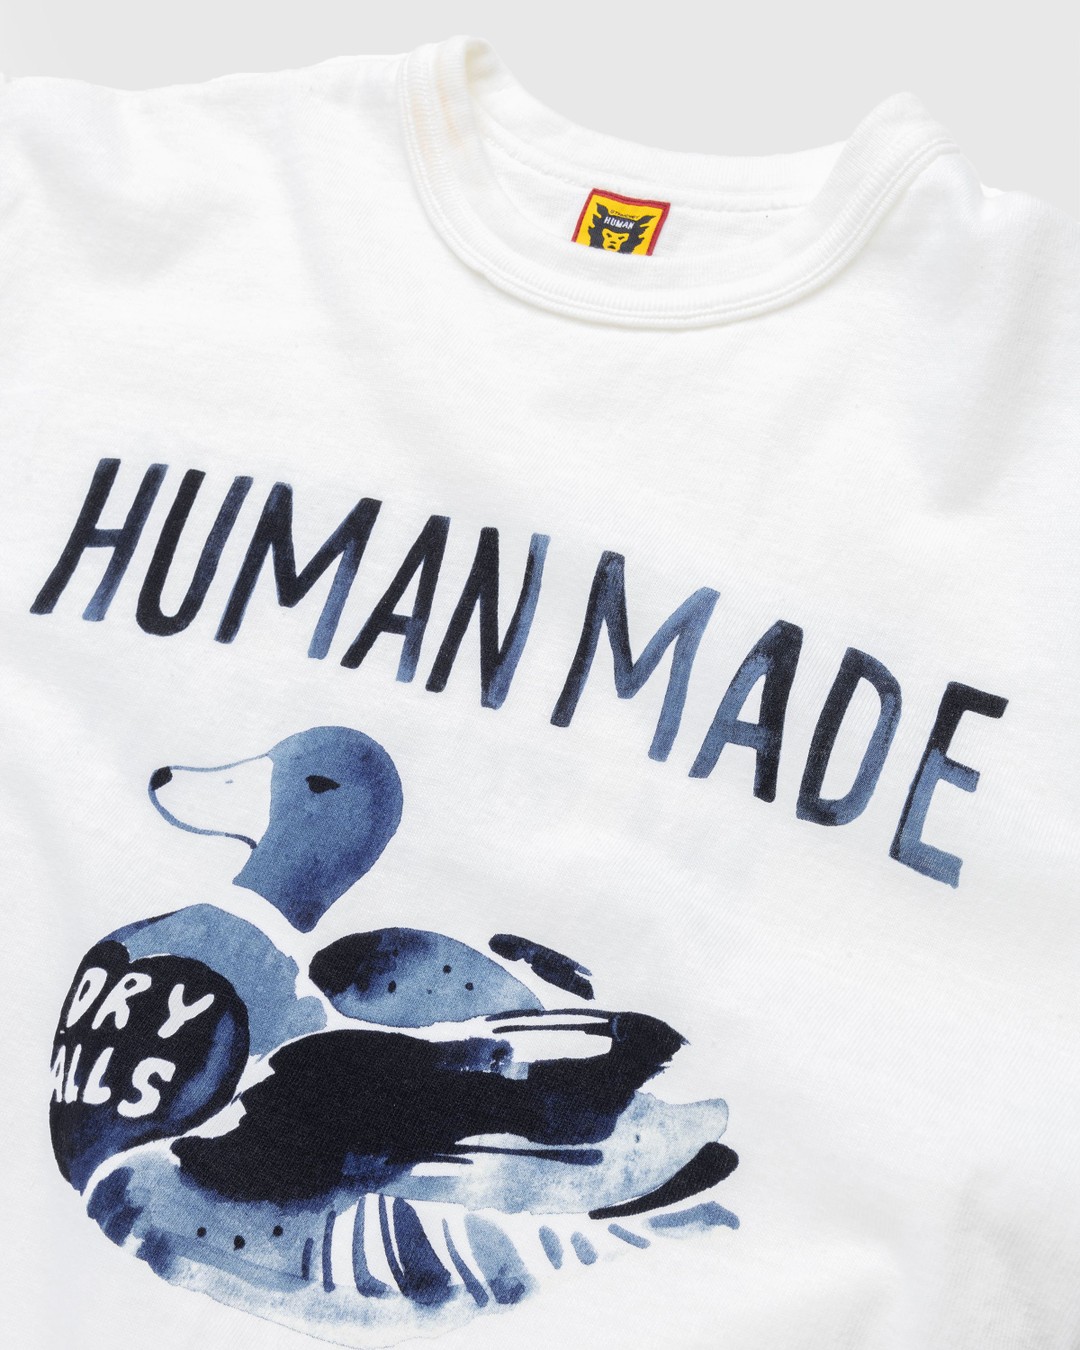 Human Made Duck Tee